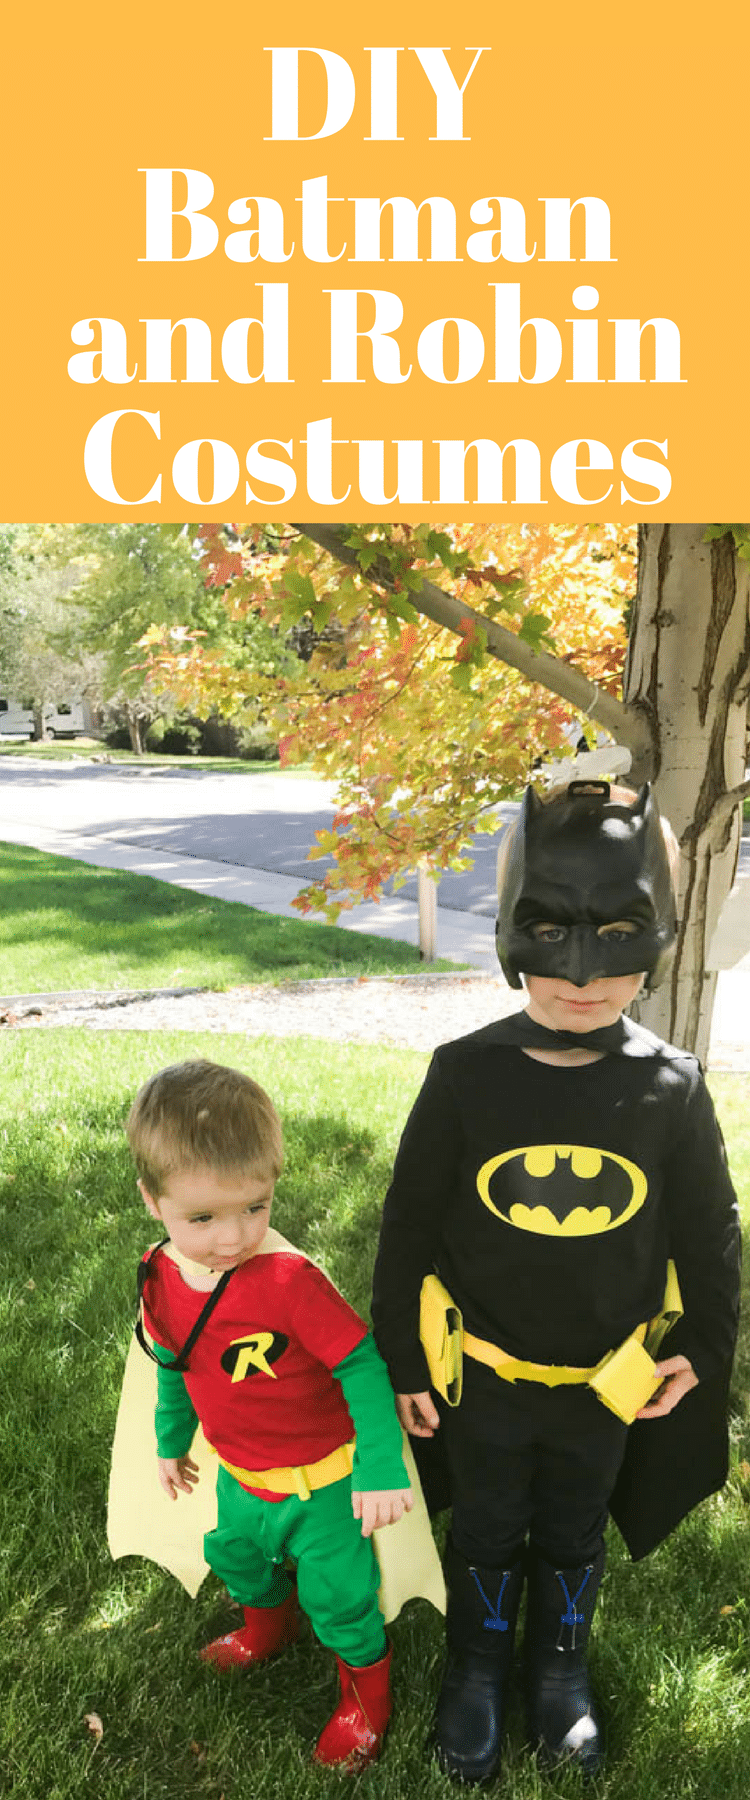 DIY Batman Costume / DIY Robin Costume / Robin Costume for Toddlers / Batman Costume for Kids / DIY Halloween